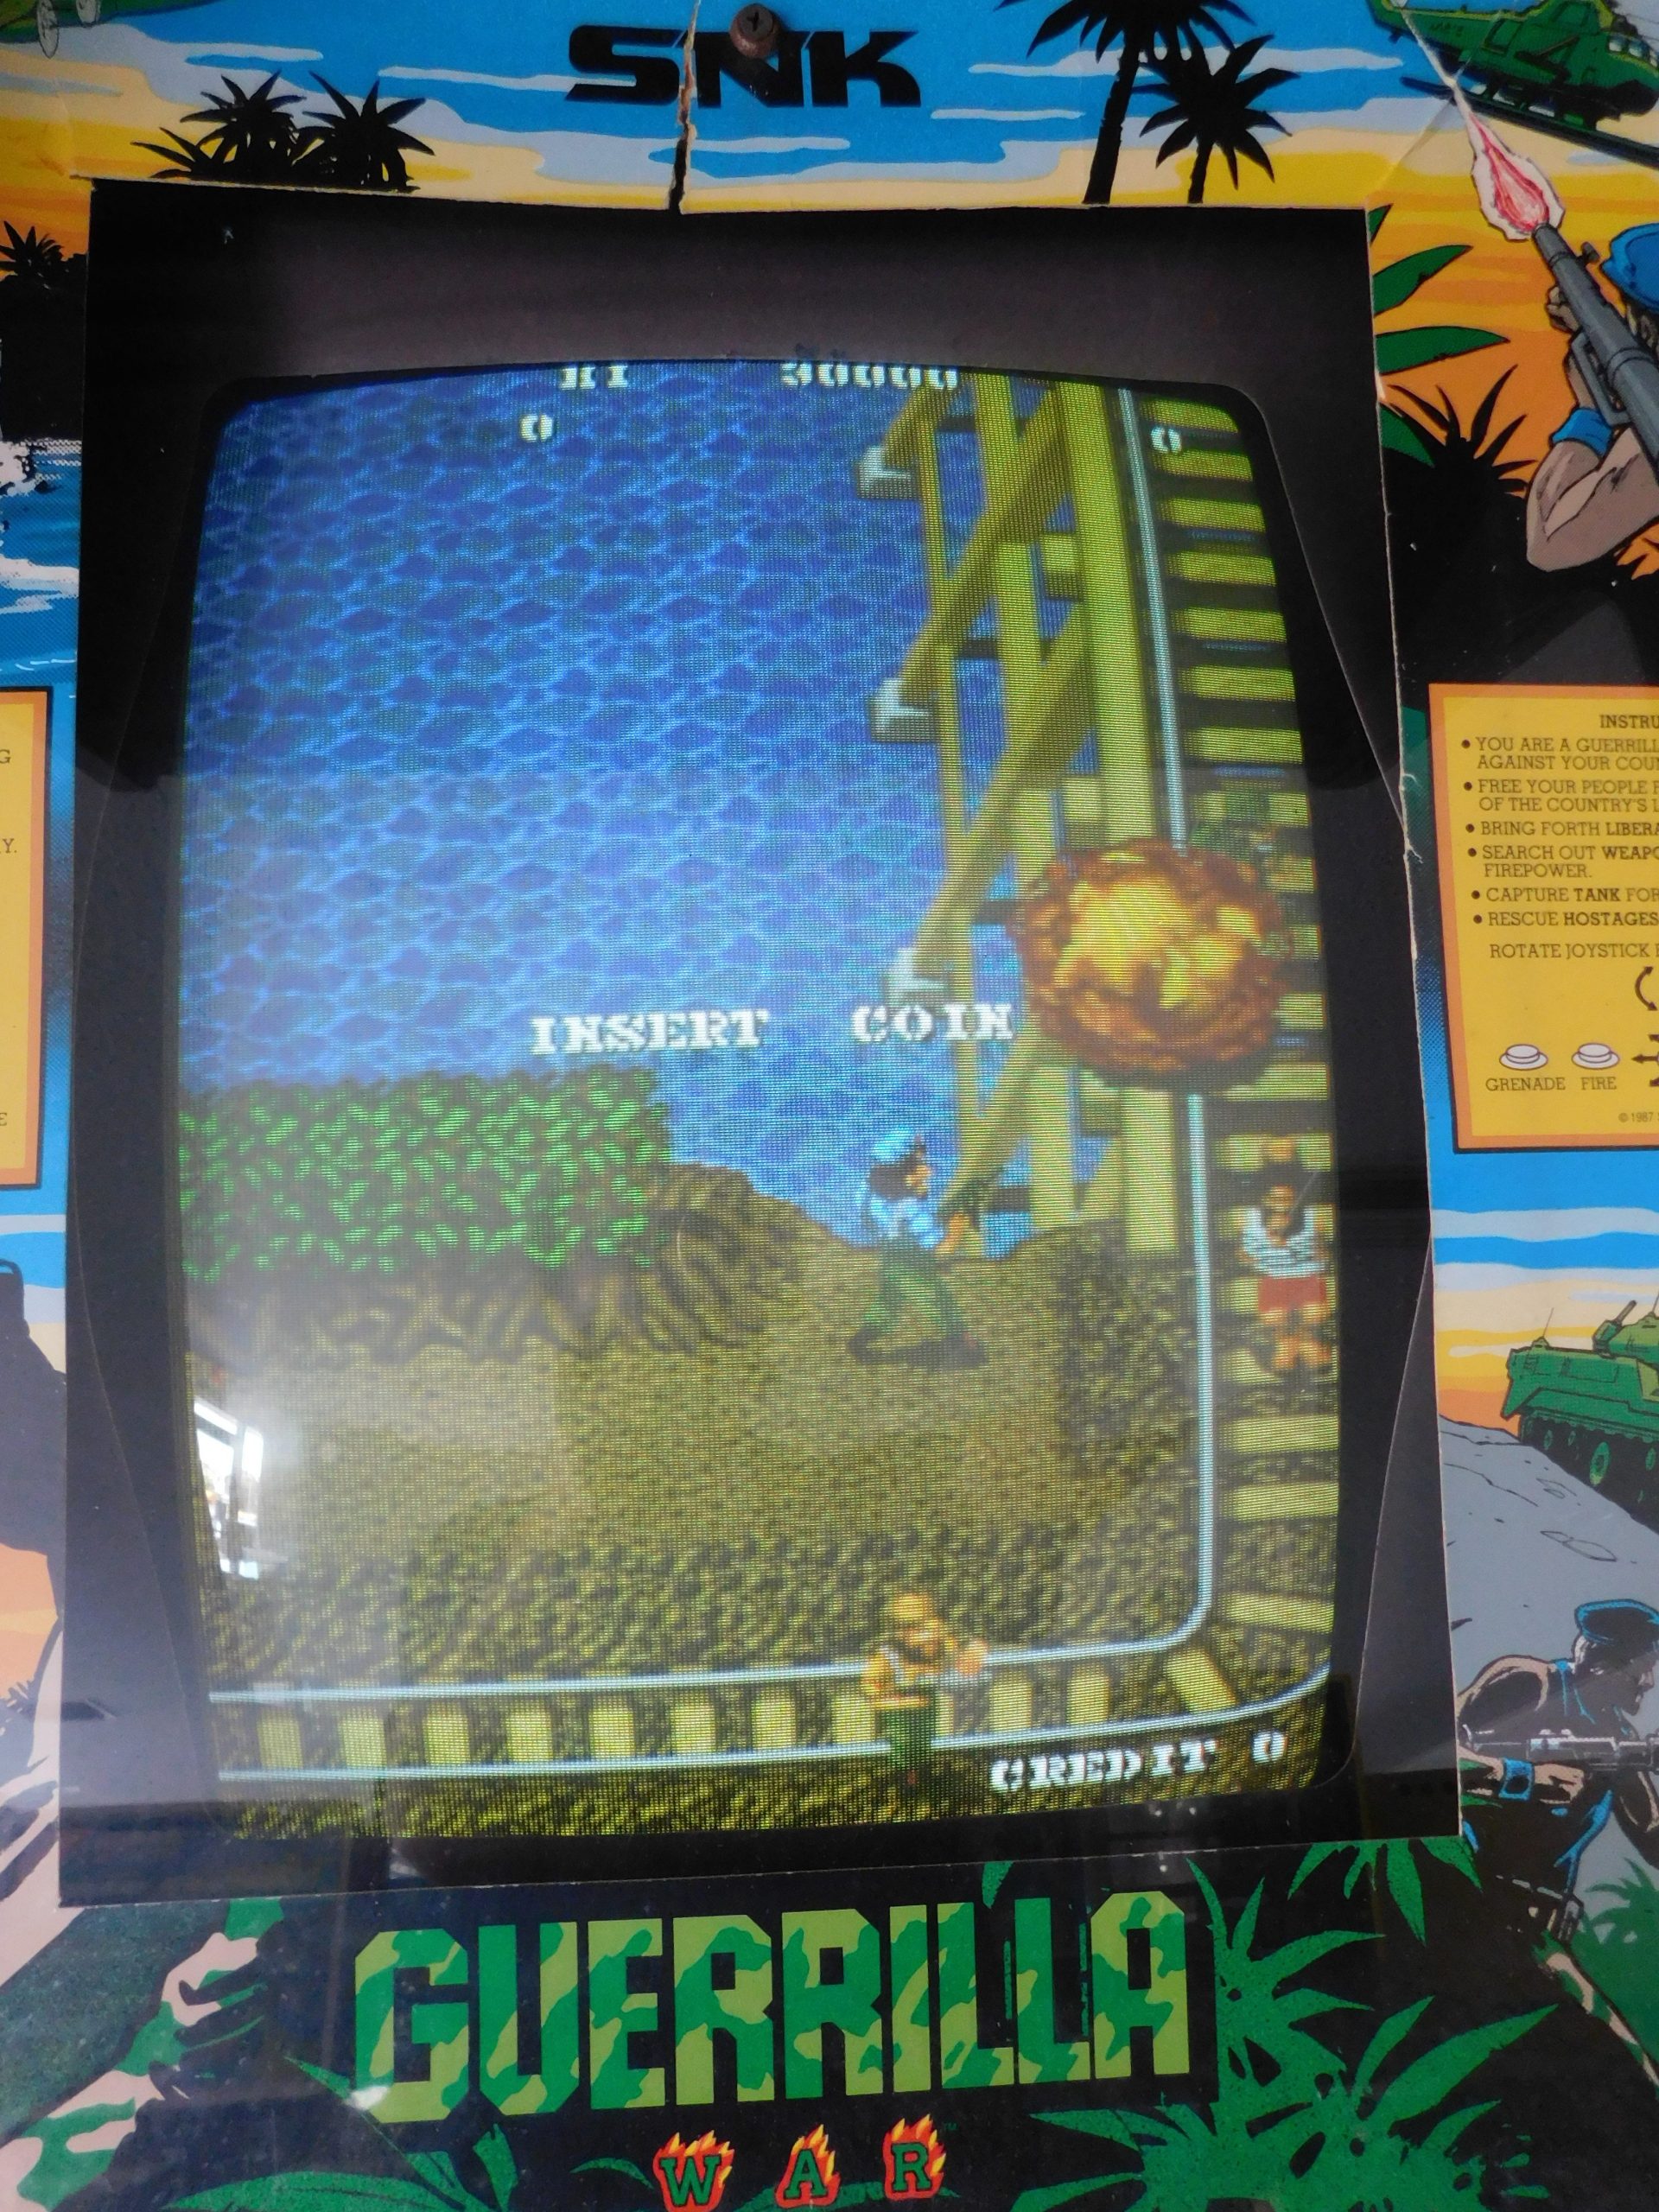 Pinball Restorations, SNK Guerrilla War Arcade Game